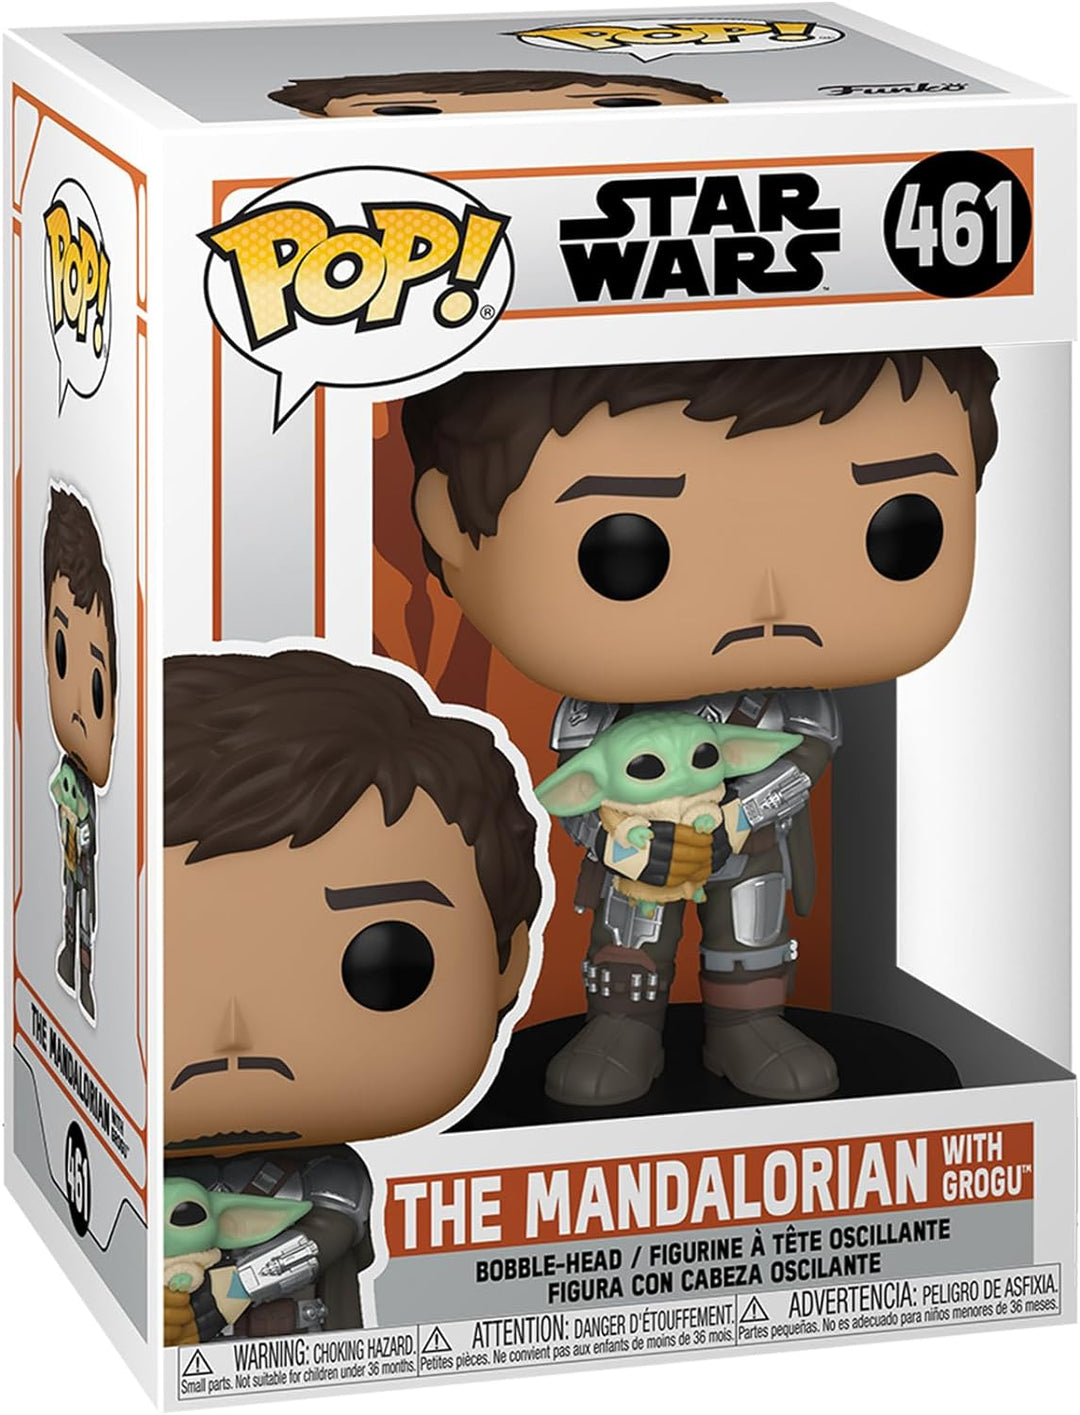 Star Wars The Mandalorian with Grogu Funko POP #461 EAN 0889698545259